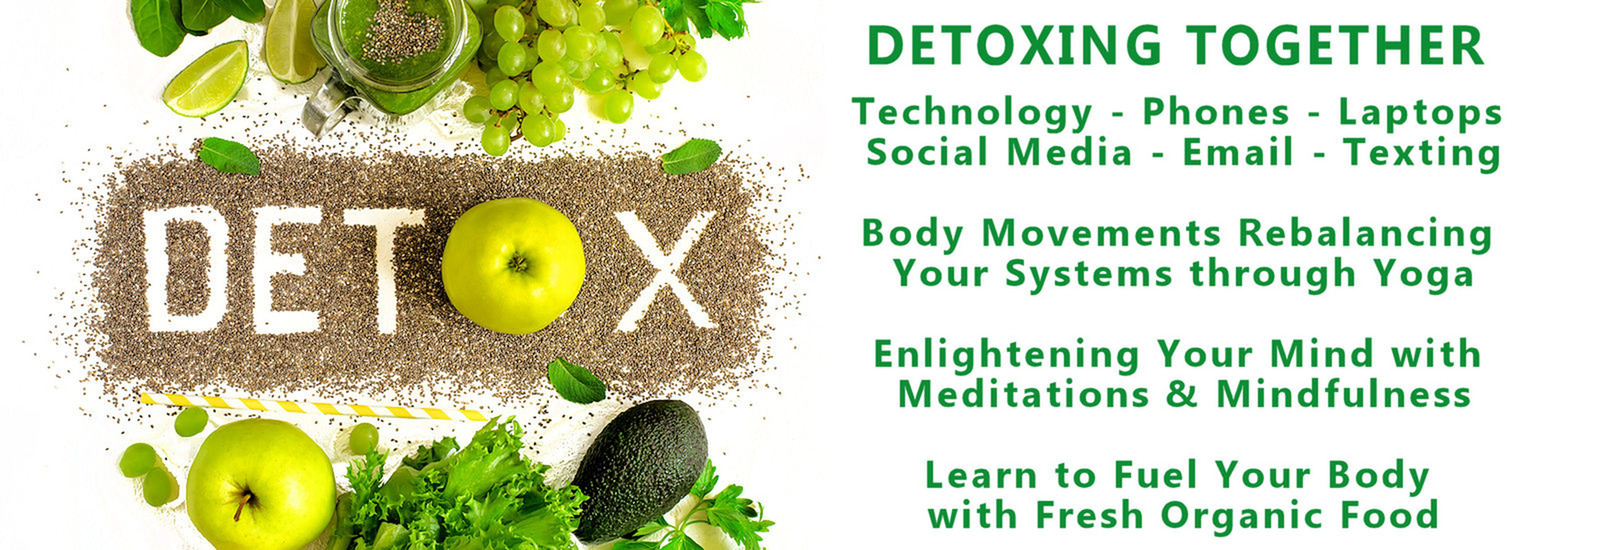 Detoxing Together on Technology, Phones, Email, Social Media, Yoga, Meditation, Mindfulness, Organic Food